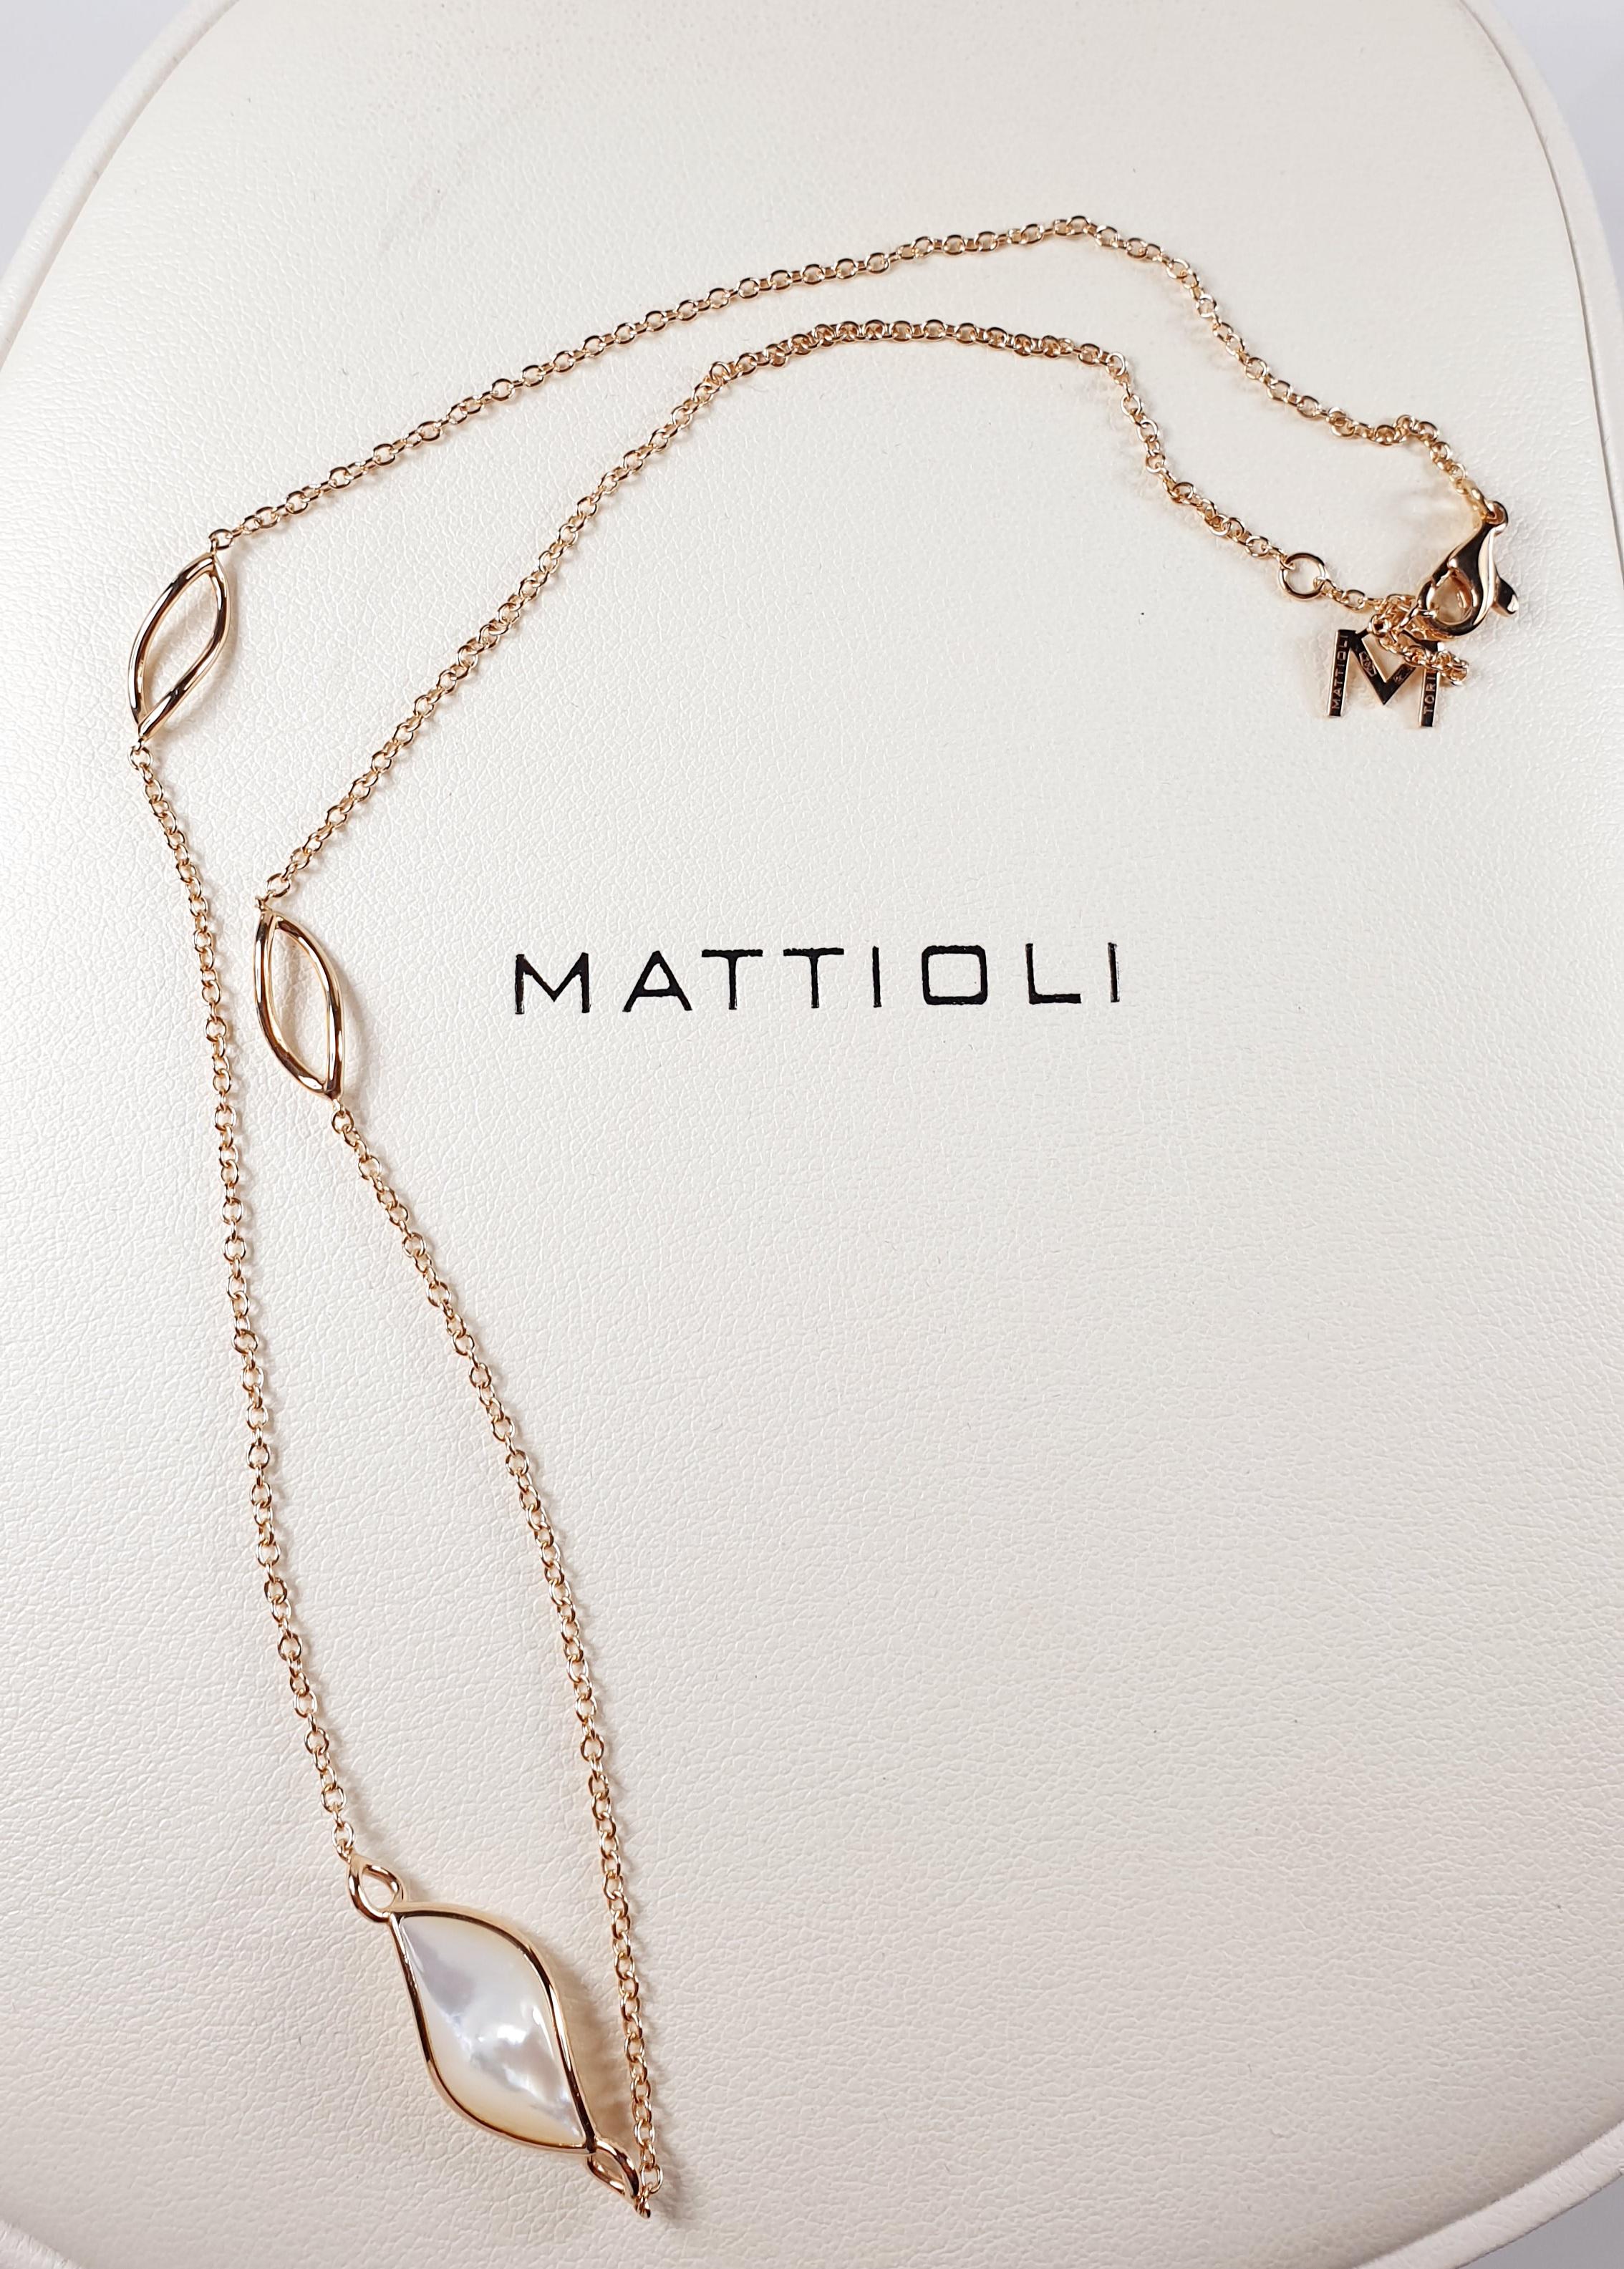 Mattioli Navettes Necklace For Sale 1